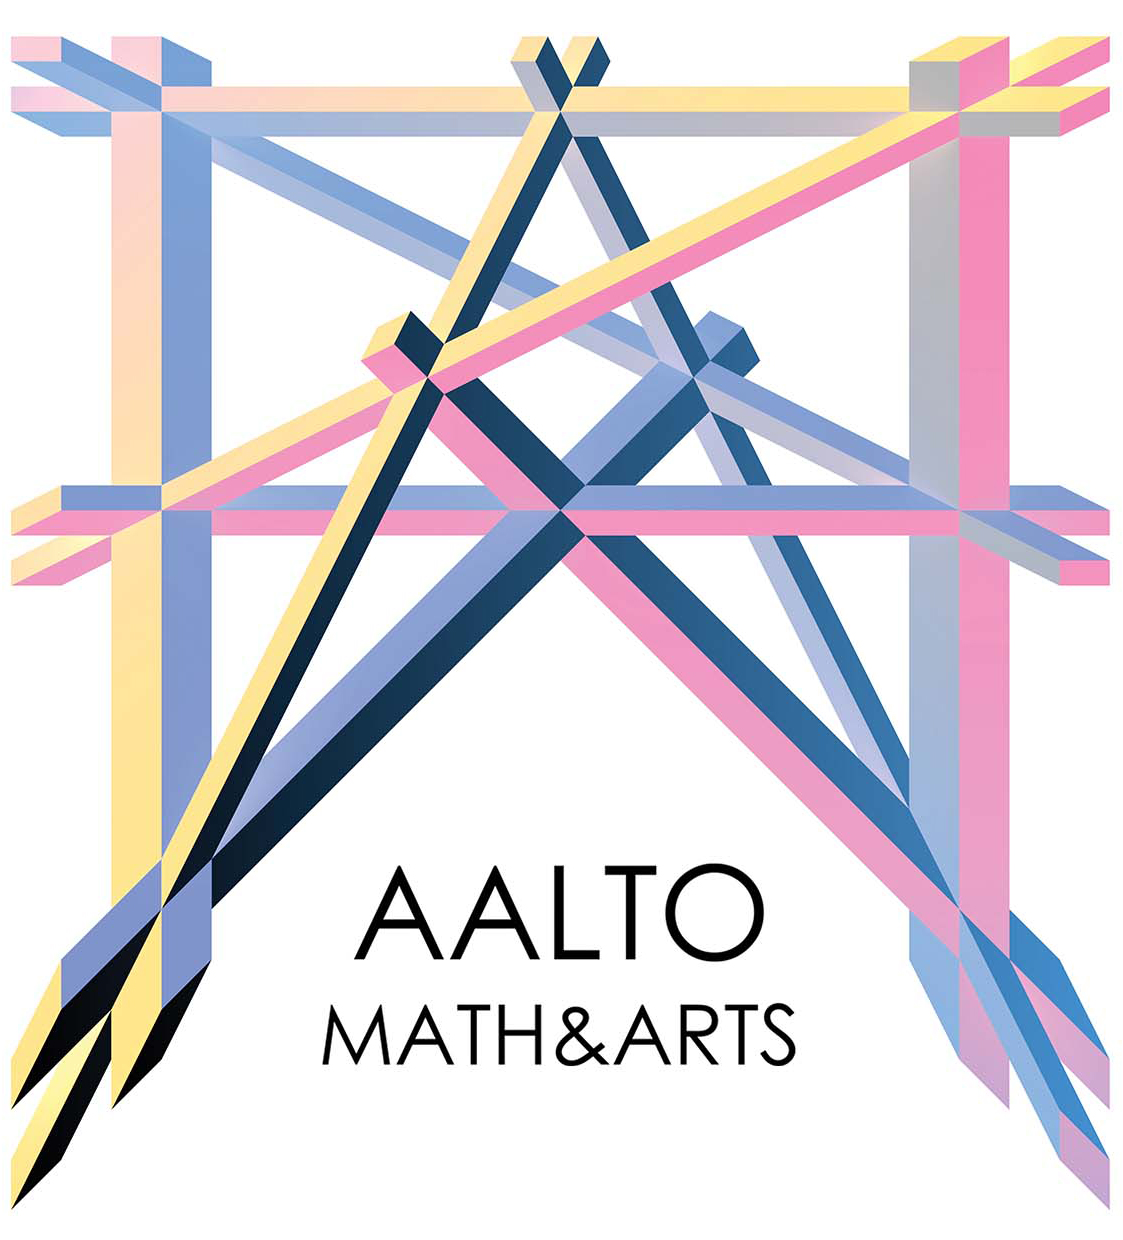 Aalto Math&Arts